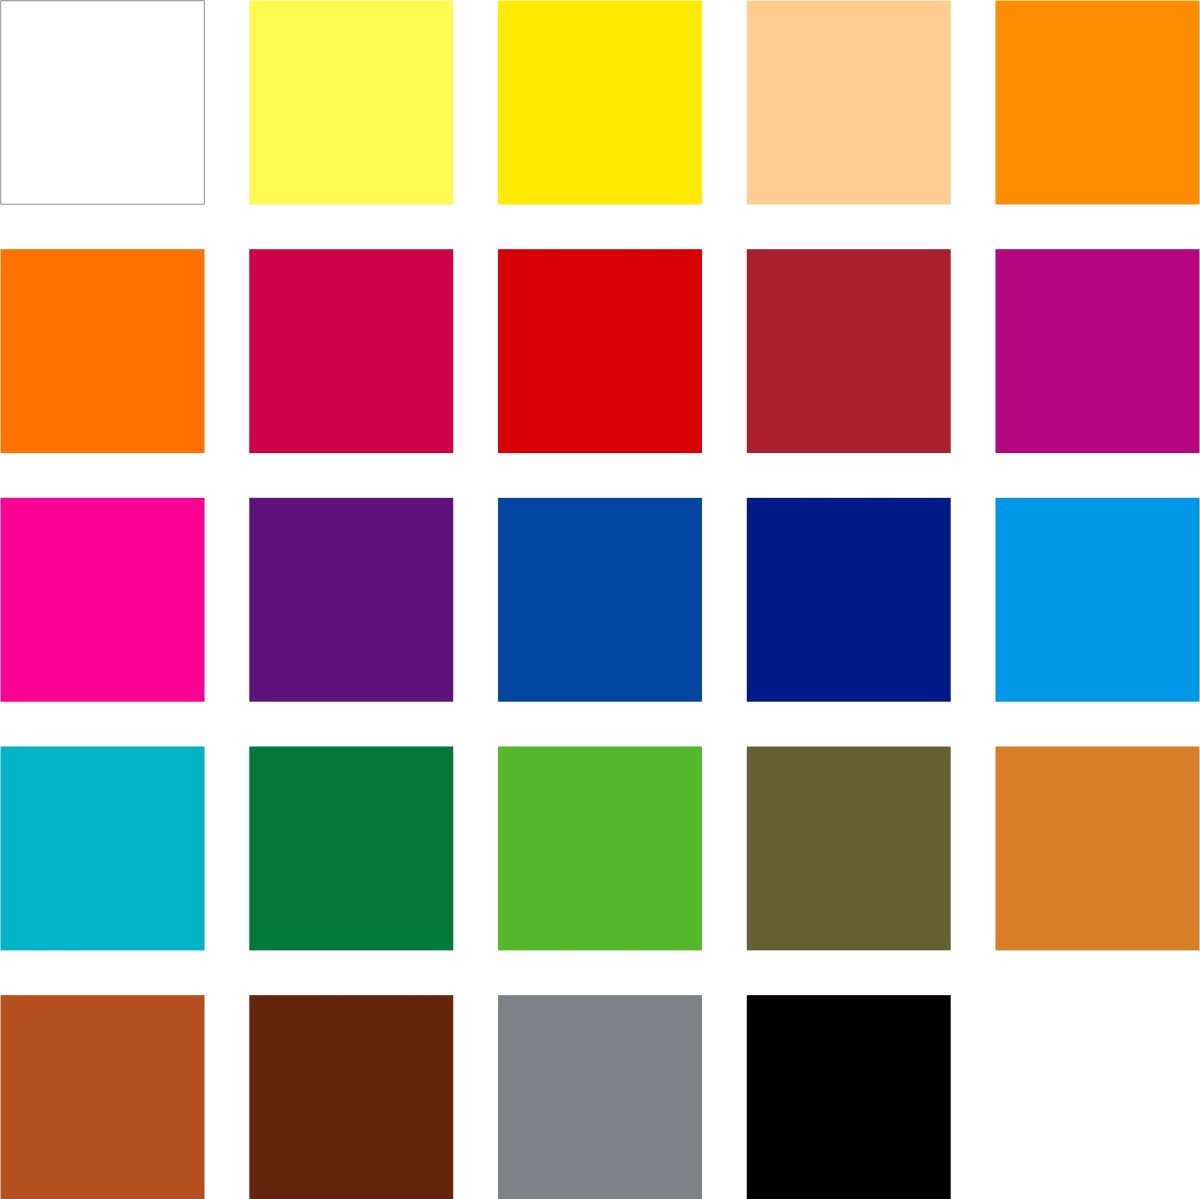 Staedtler Noris 187 färgpennor | 24 färger